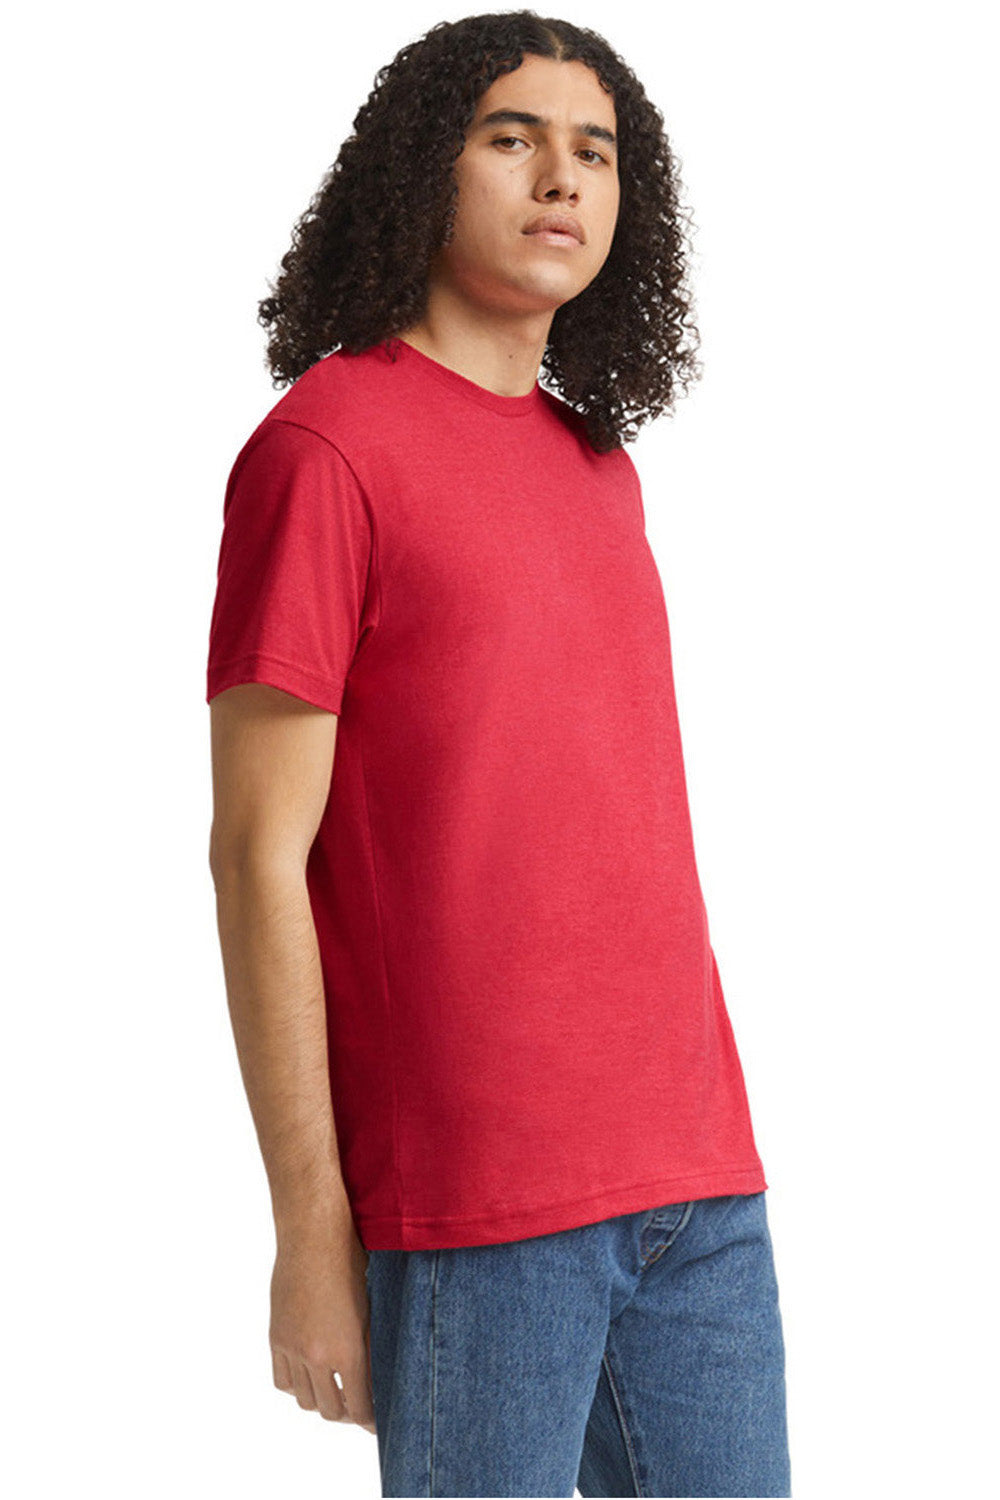 American Apparel 2001CVC Mens CVC Short Sleeve Crewneck T-Shirt Heather Red Model Side